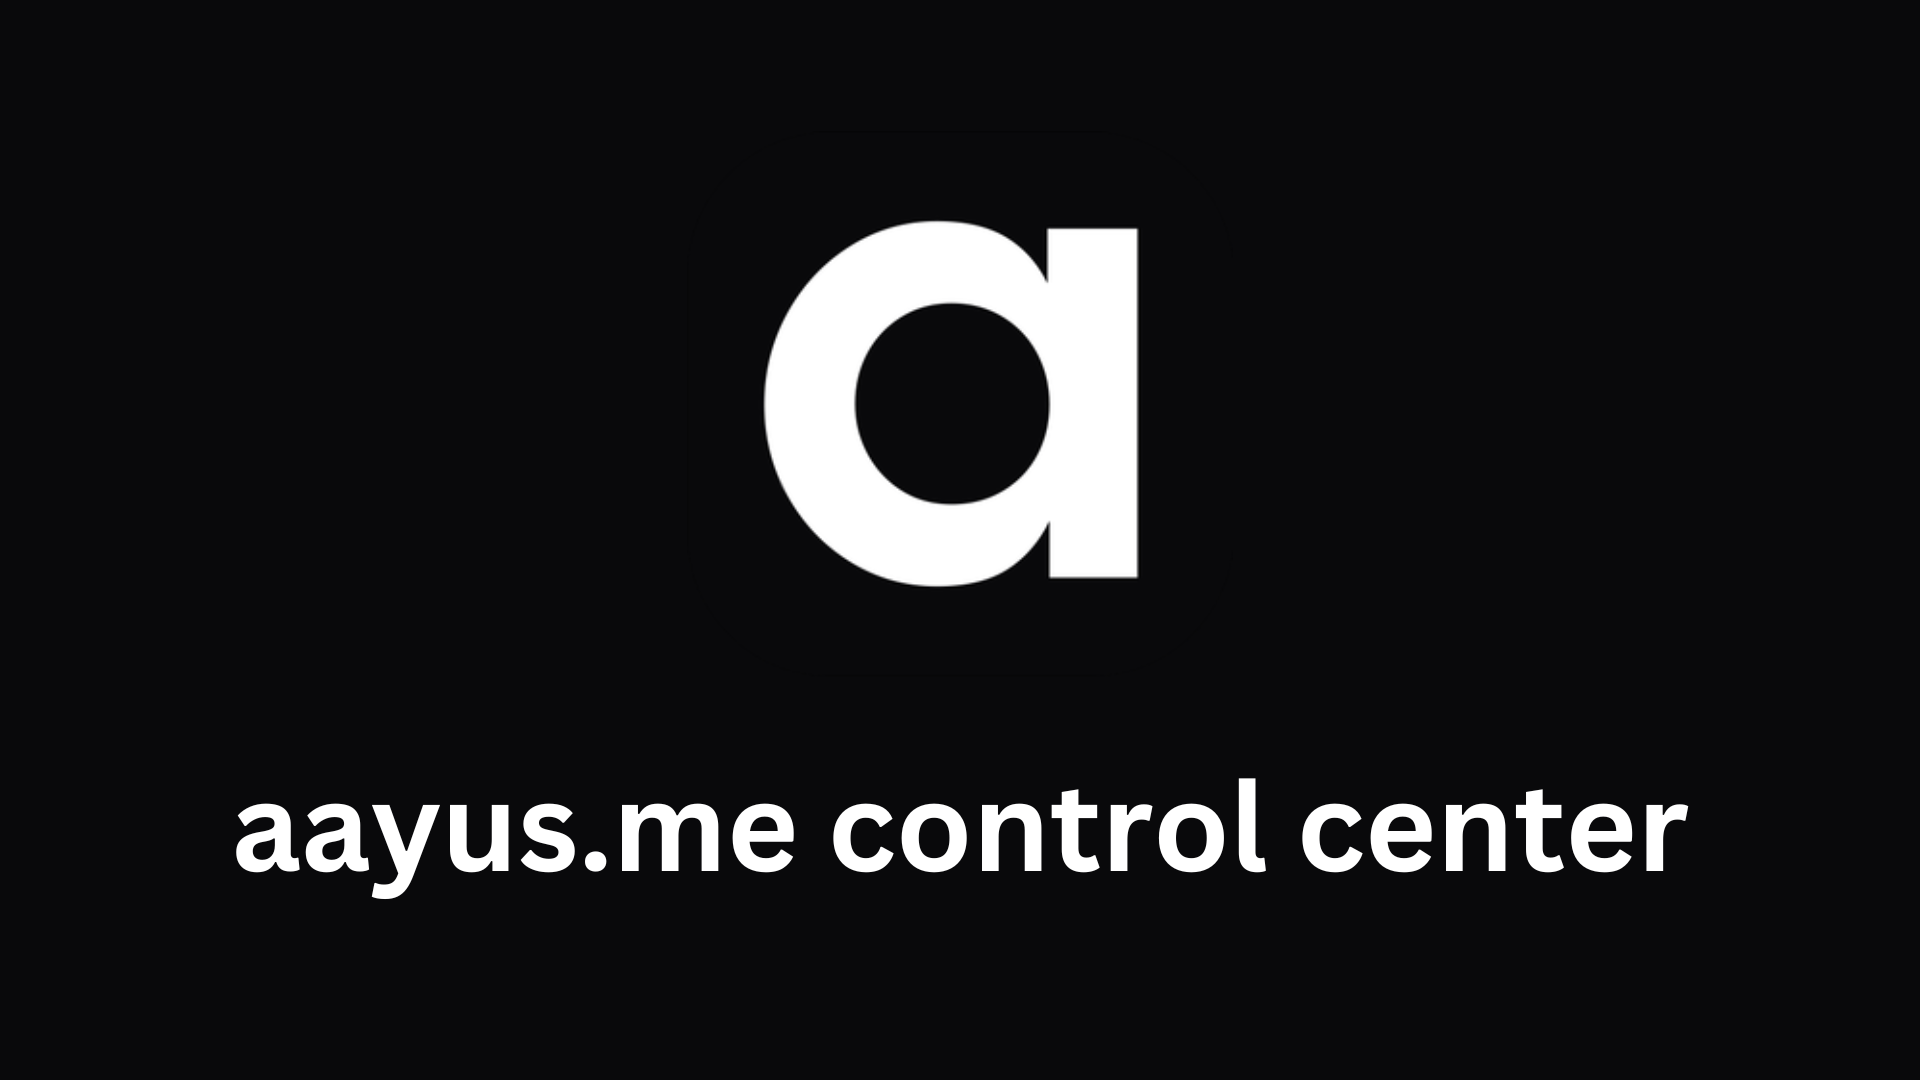 aayus.me control center